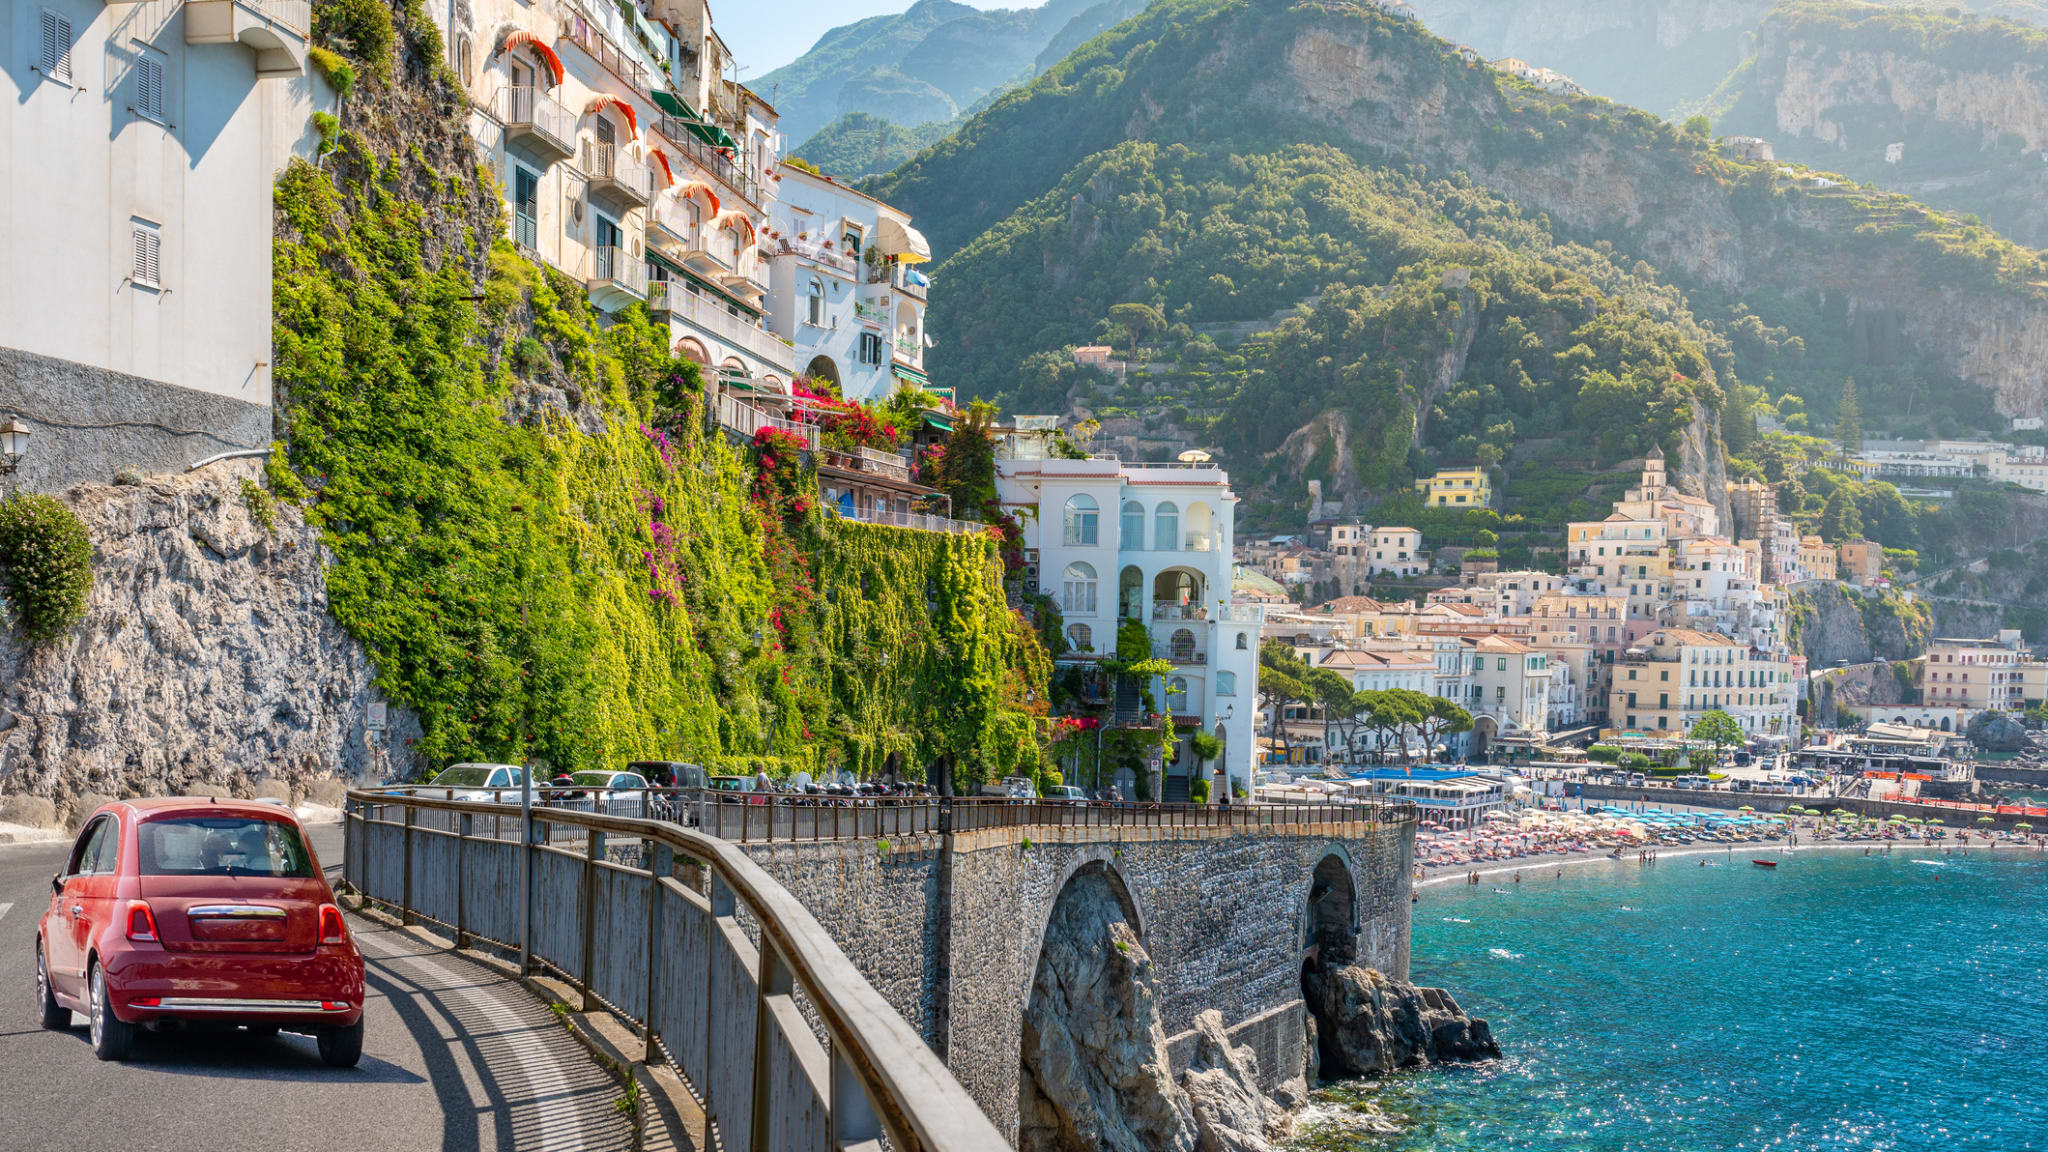 Strasse bei Neapel, Italien © Francesco Riccardo Iacomino/Moment via Getty Images